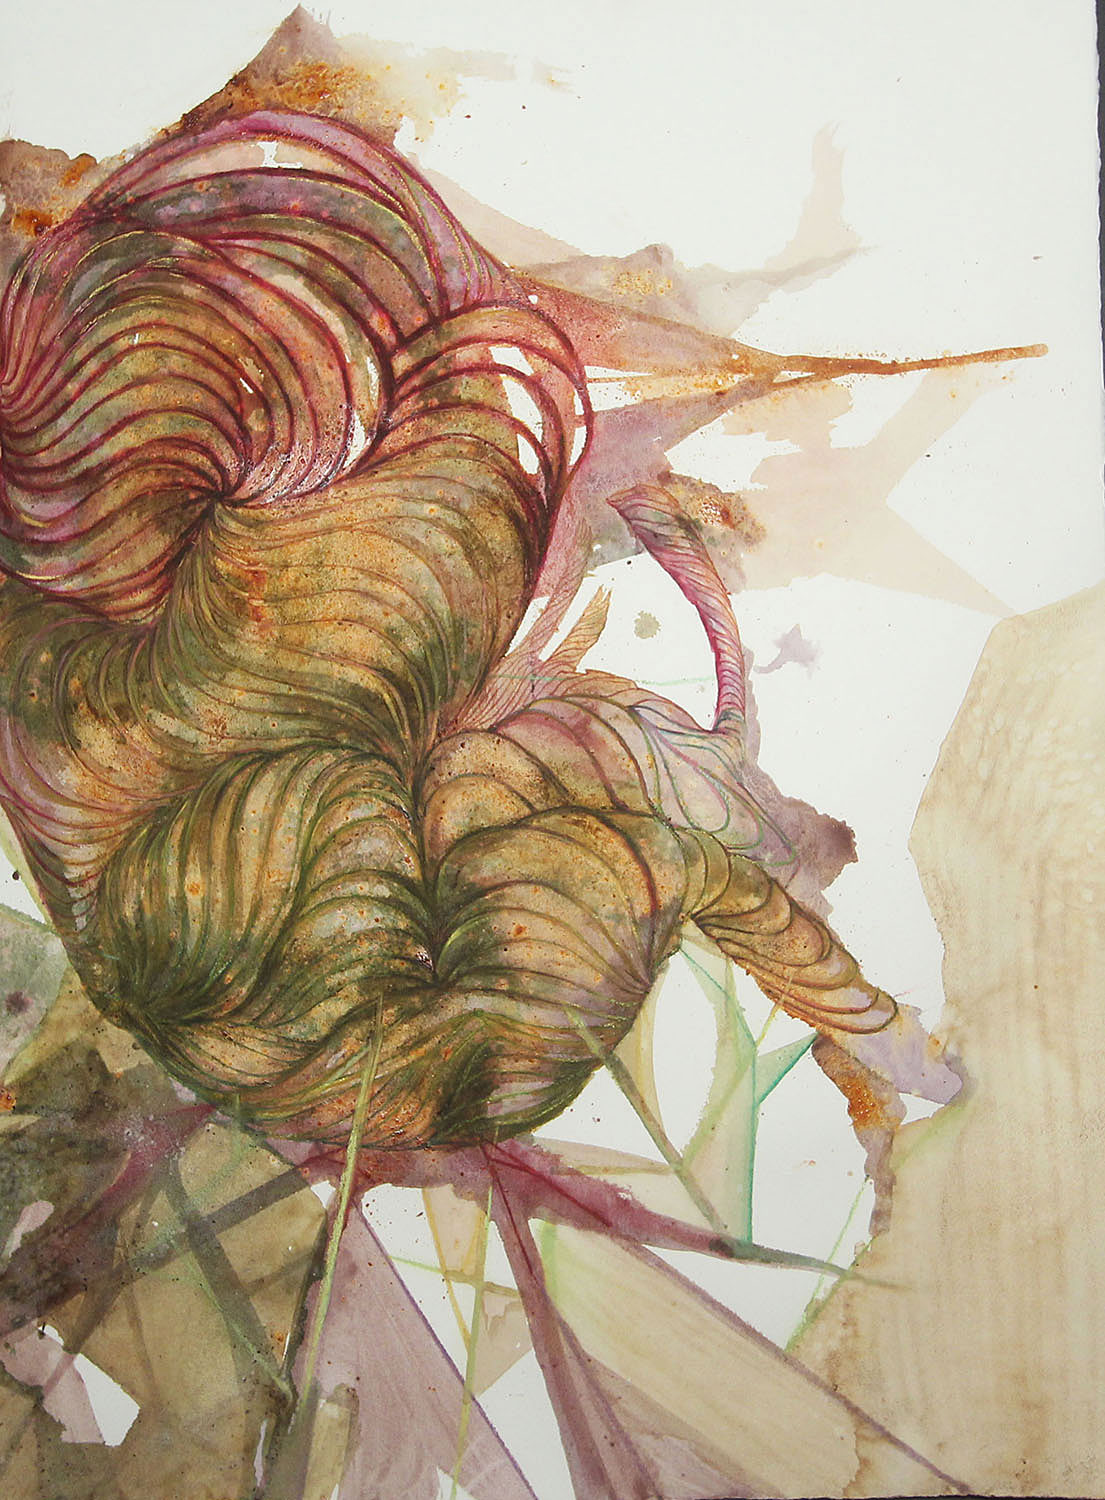 Rachel Joob, OrganicBody, 2013. Coffee, wine, baking soda, drink mix, salt, chalk pastel and watercolor pencils on watercolor paper, 21.5 x 28.5 in.